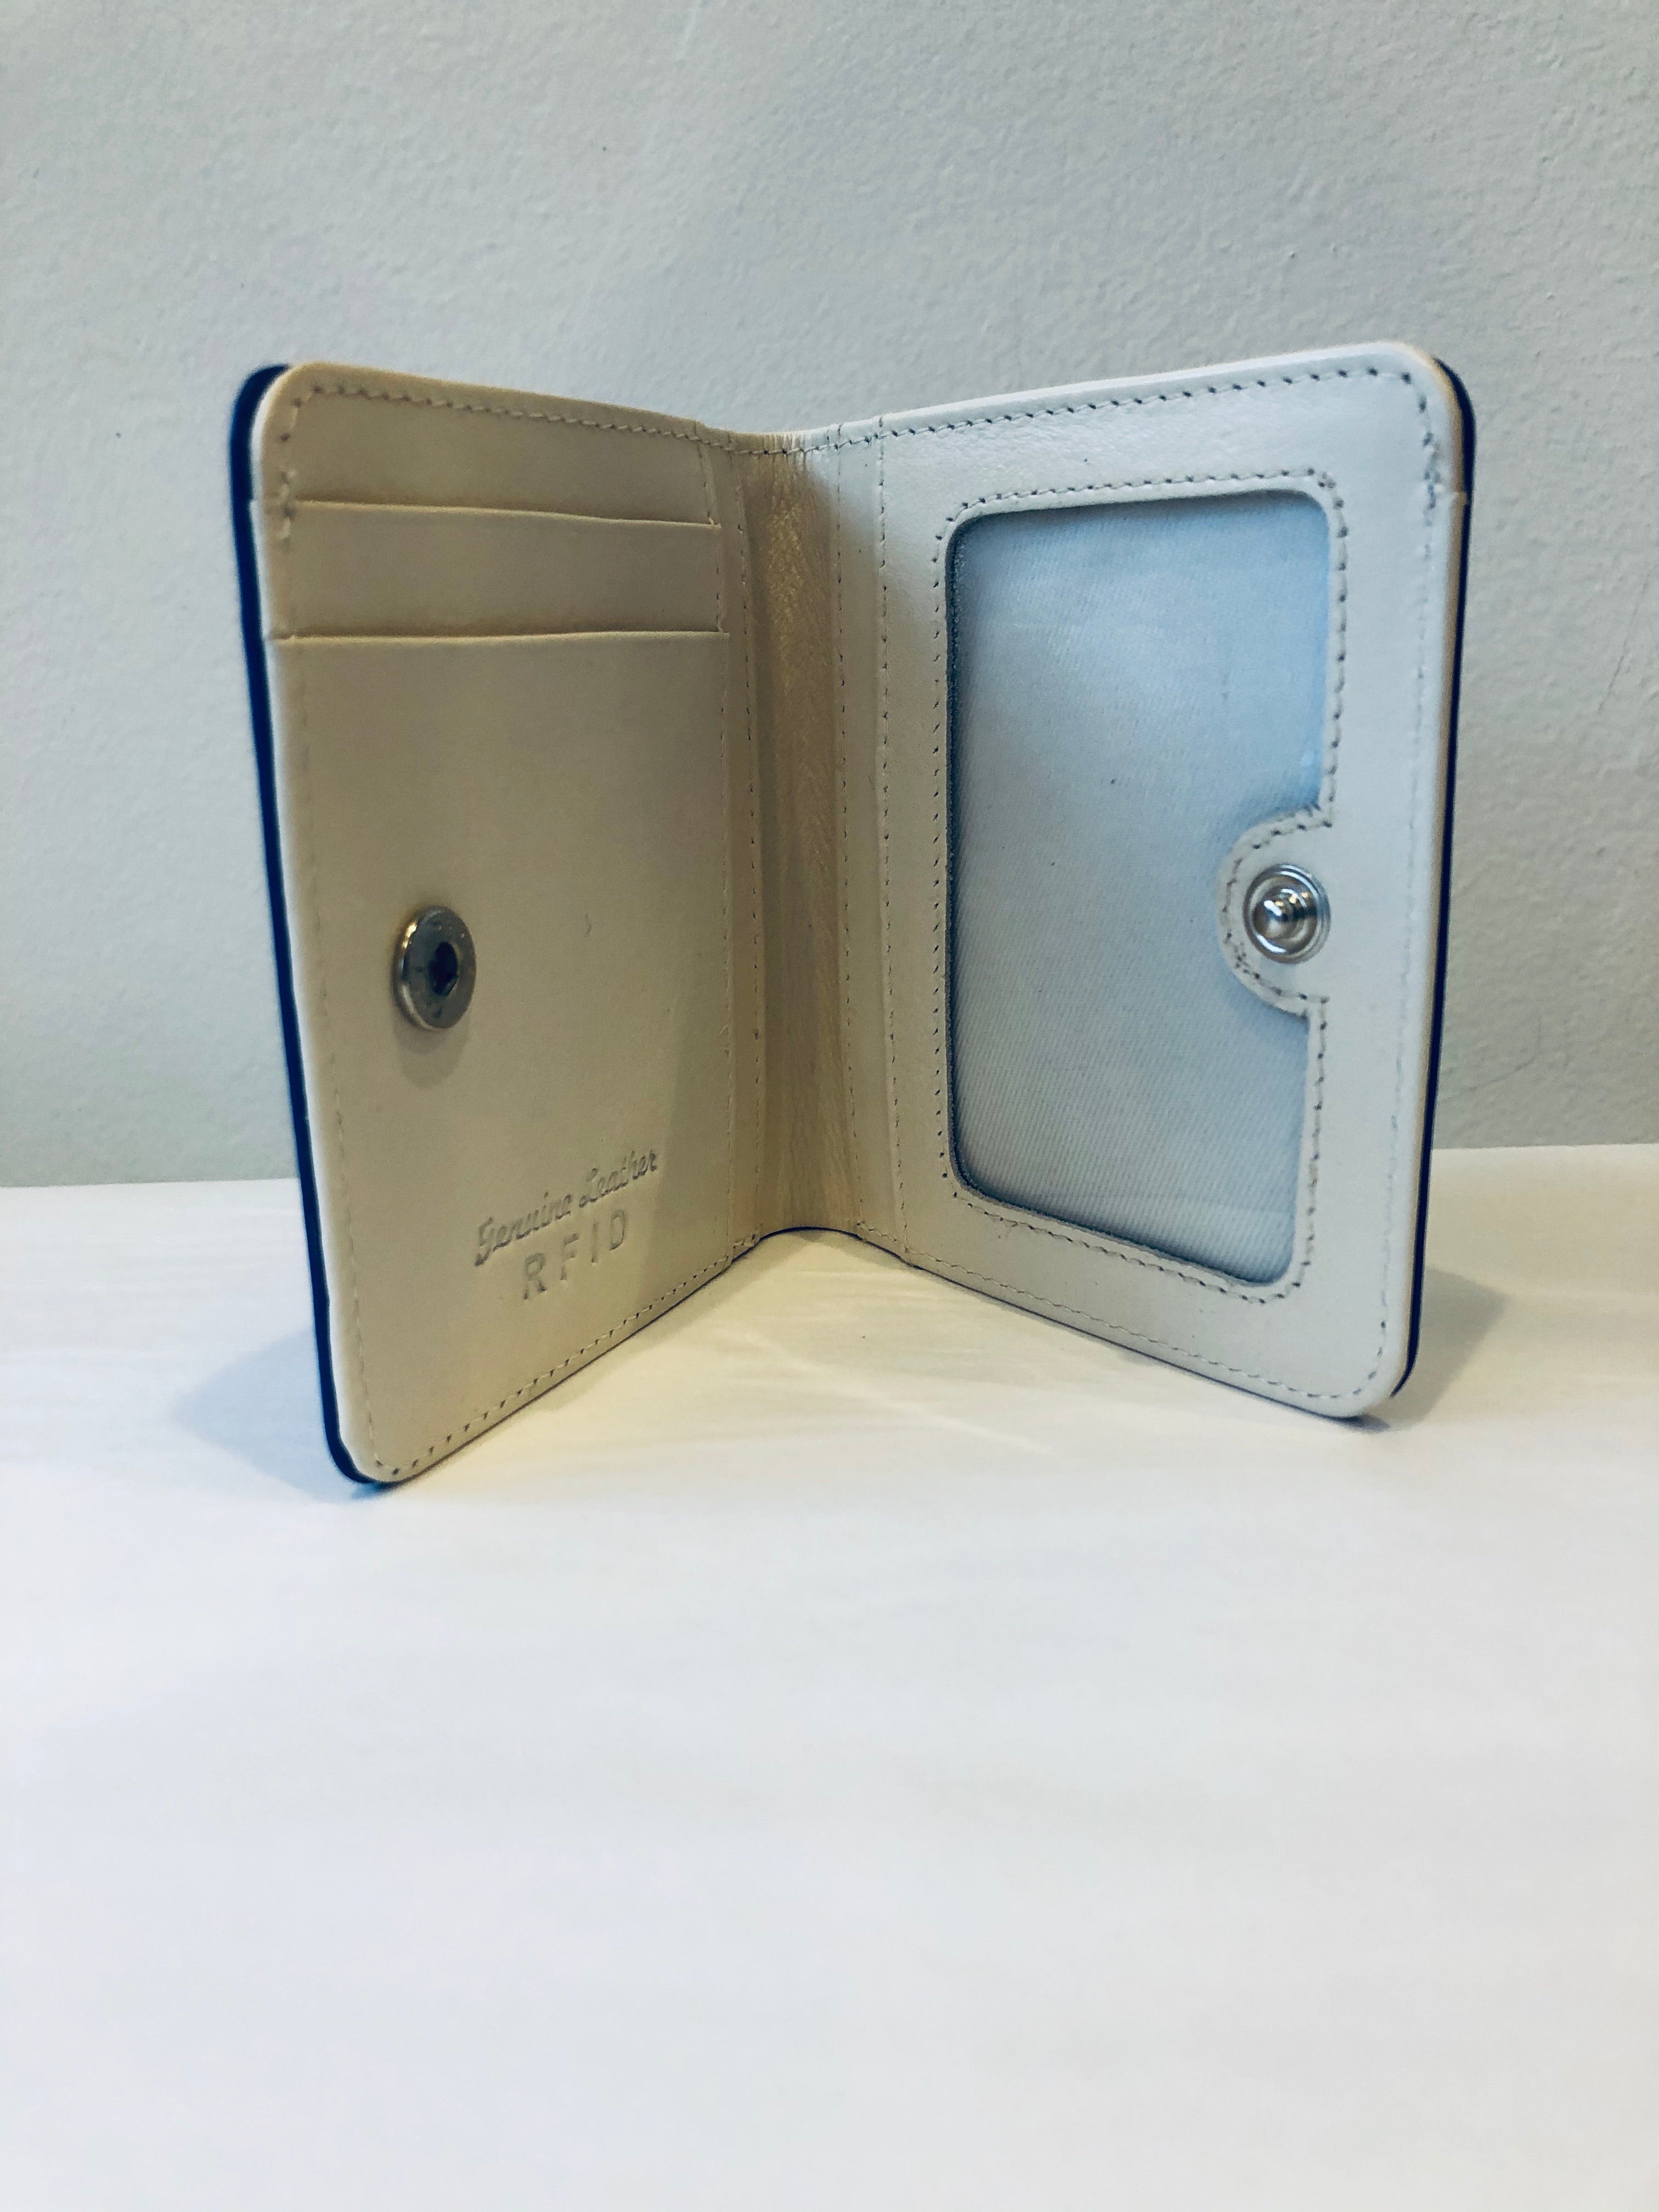 cobalt blue wallet